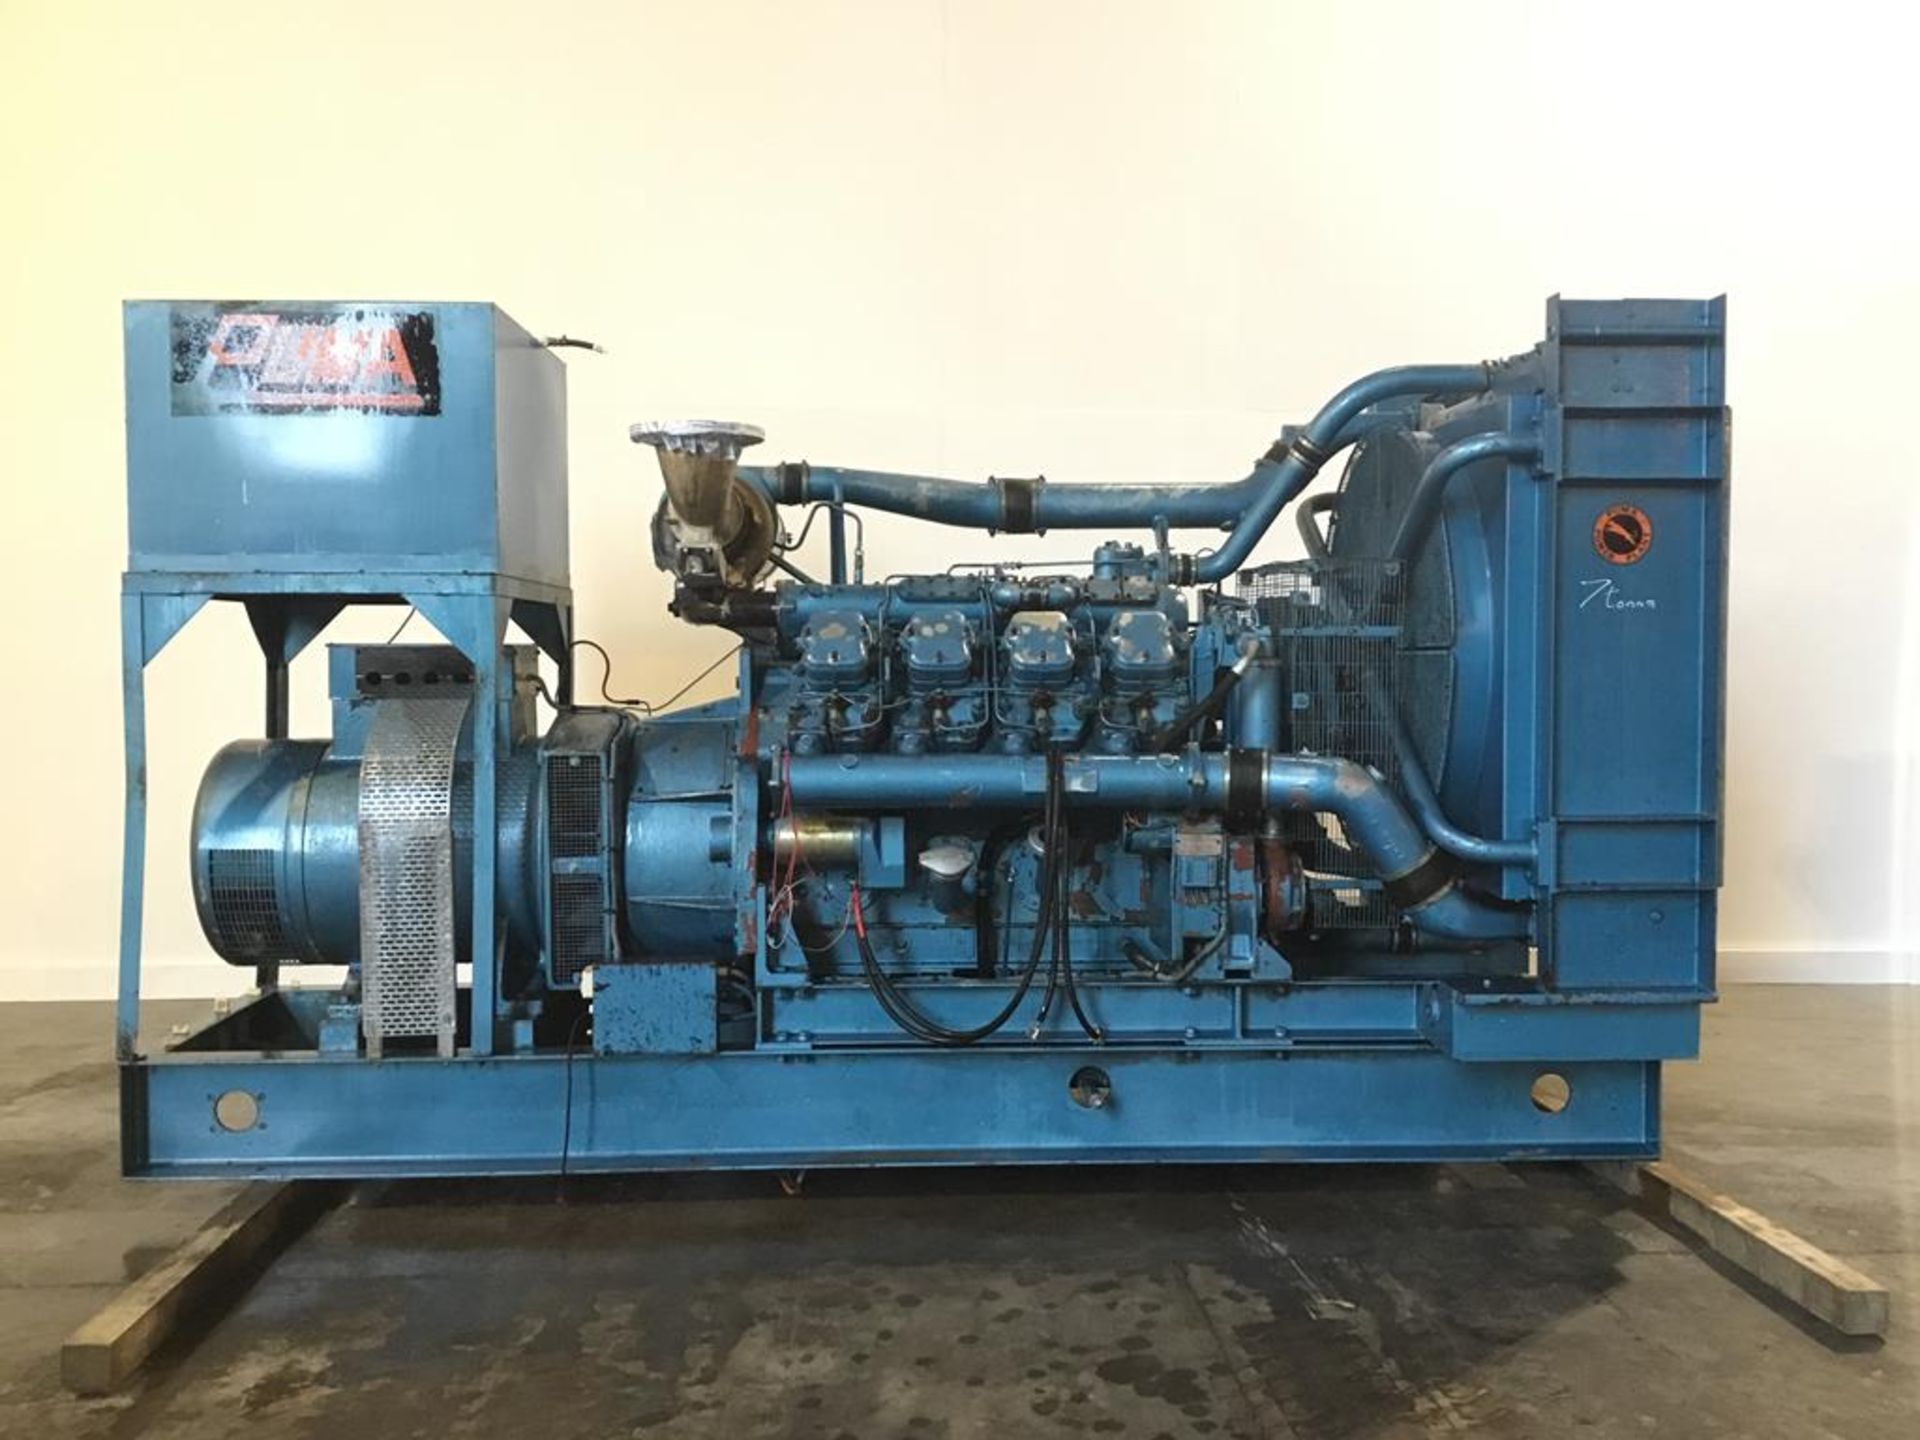 Dorman 395kva Diesel Generator - Image 6 of 11